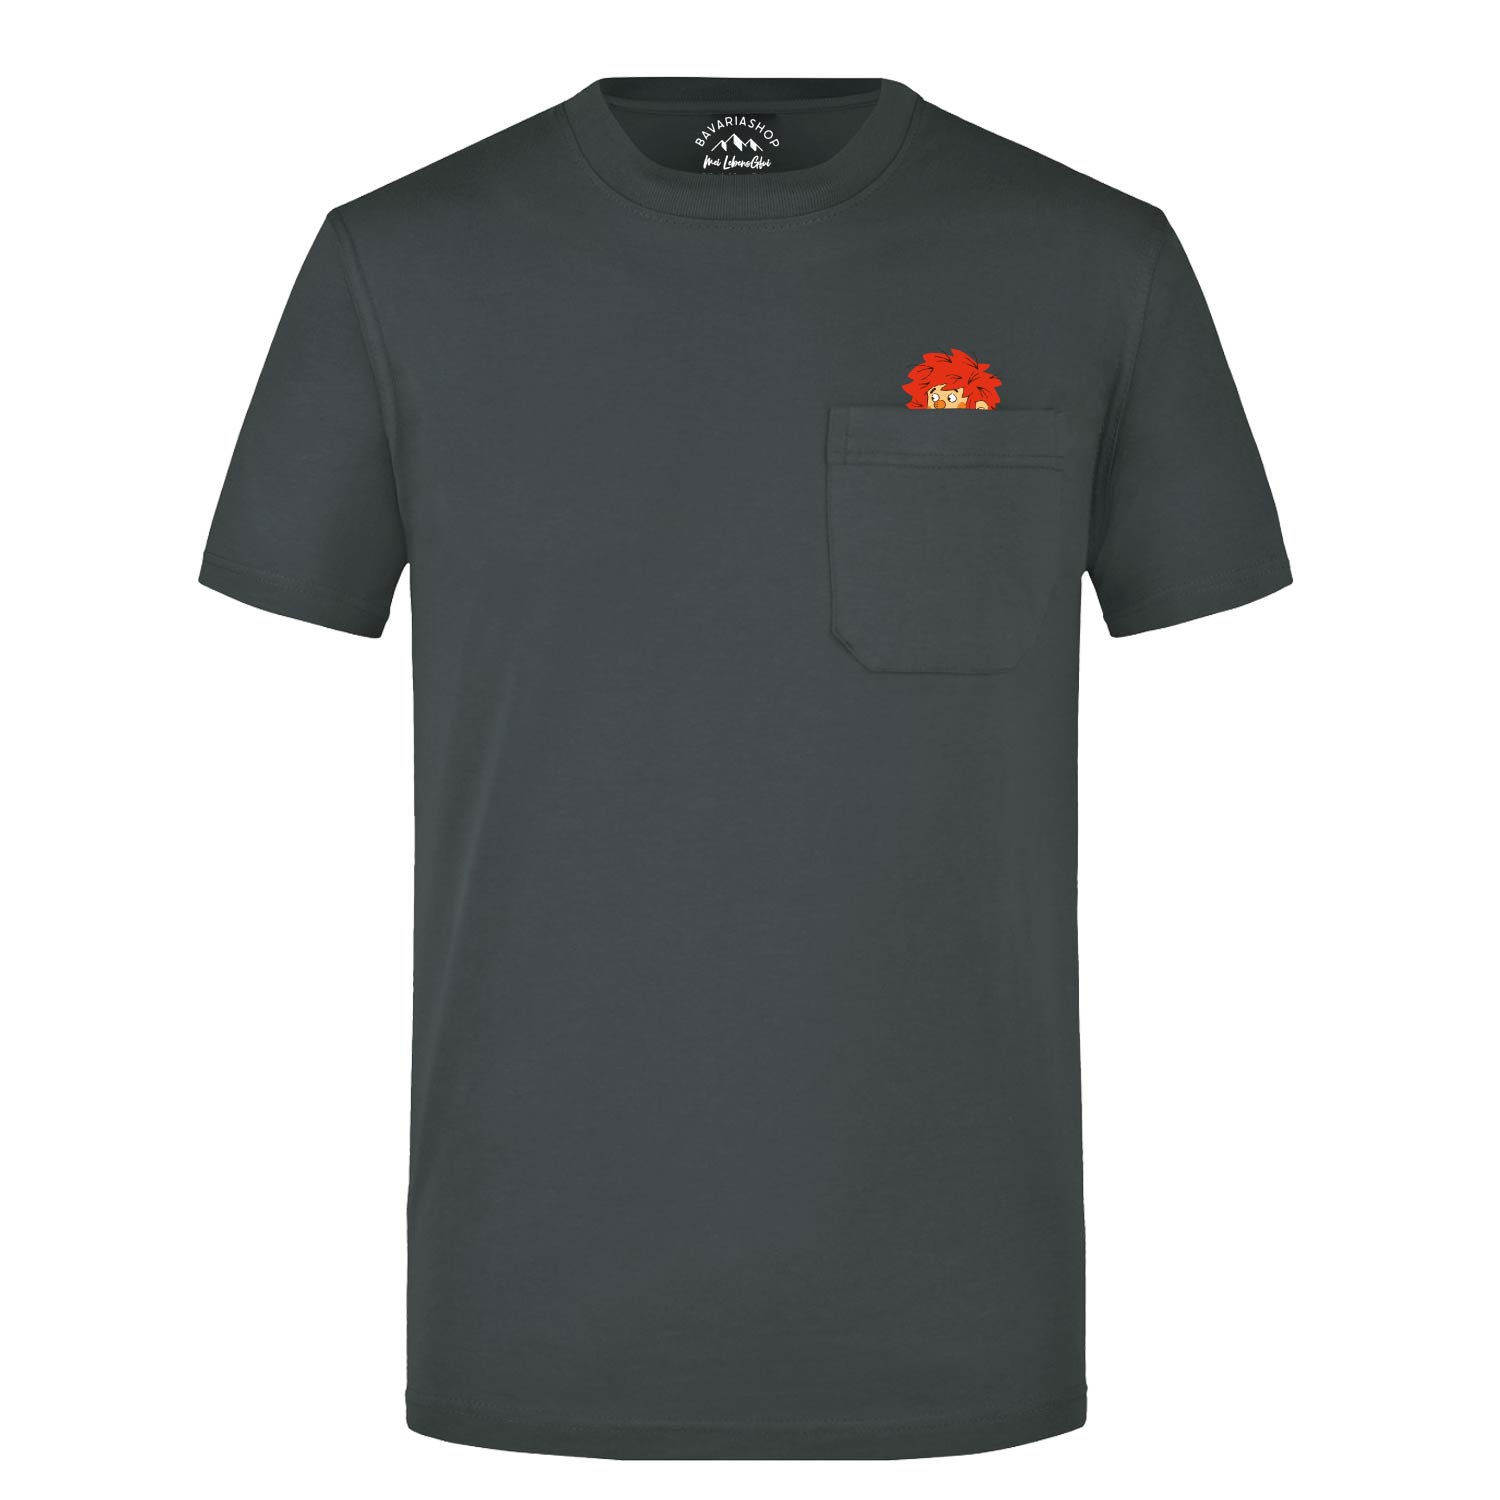 ®Pumuckl T-Shirt "Schabernack"